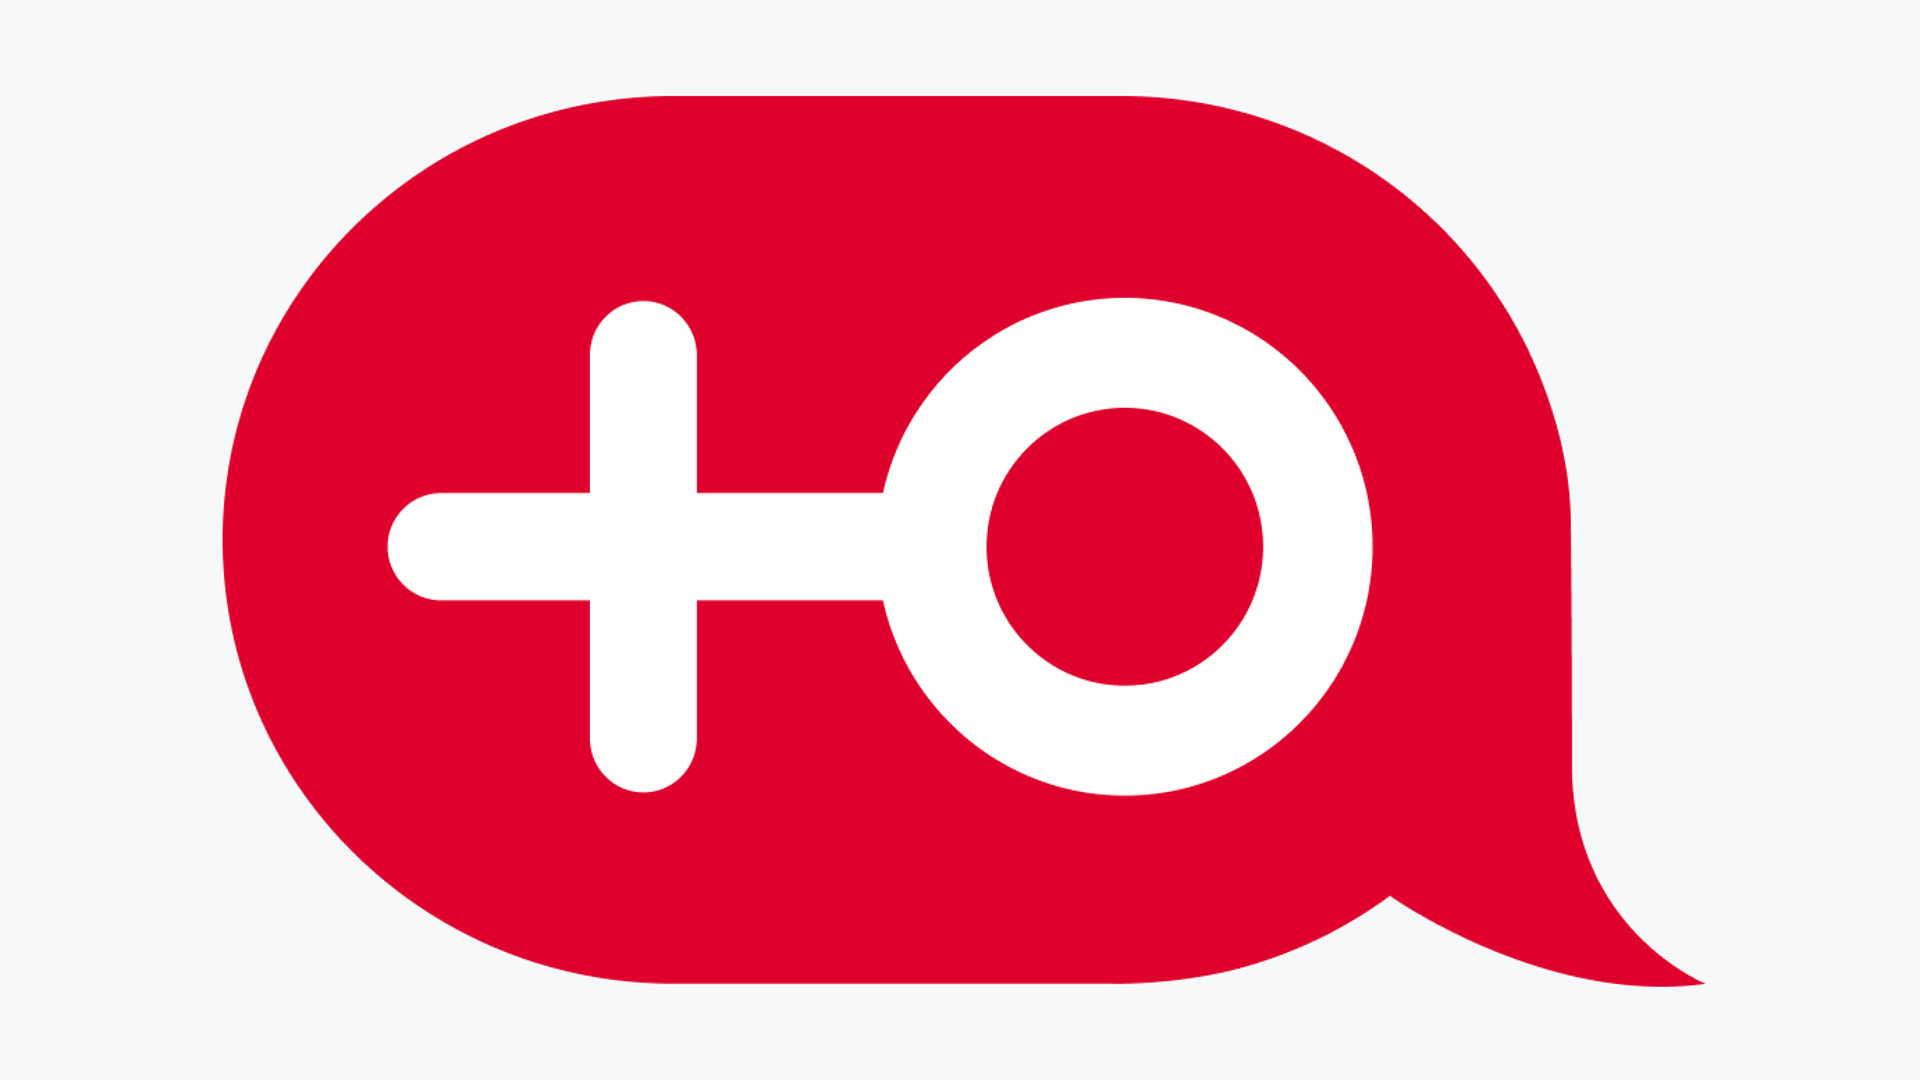 Https tv u. Канал ю. Значок канала ю. ЮТВ логотип. Логотип телеканала ю ТВ.